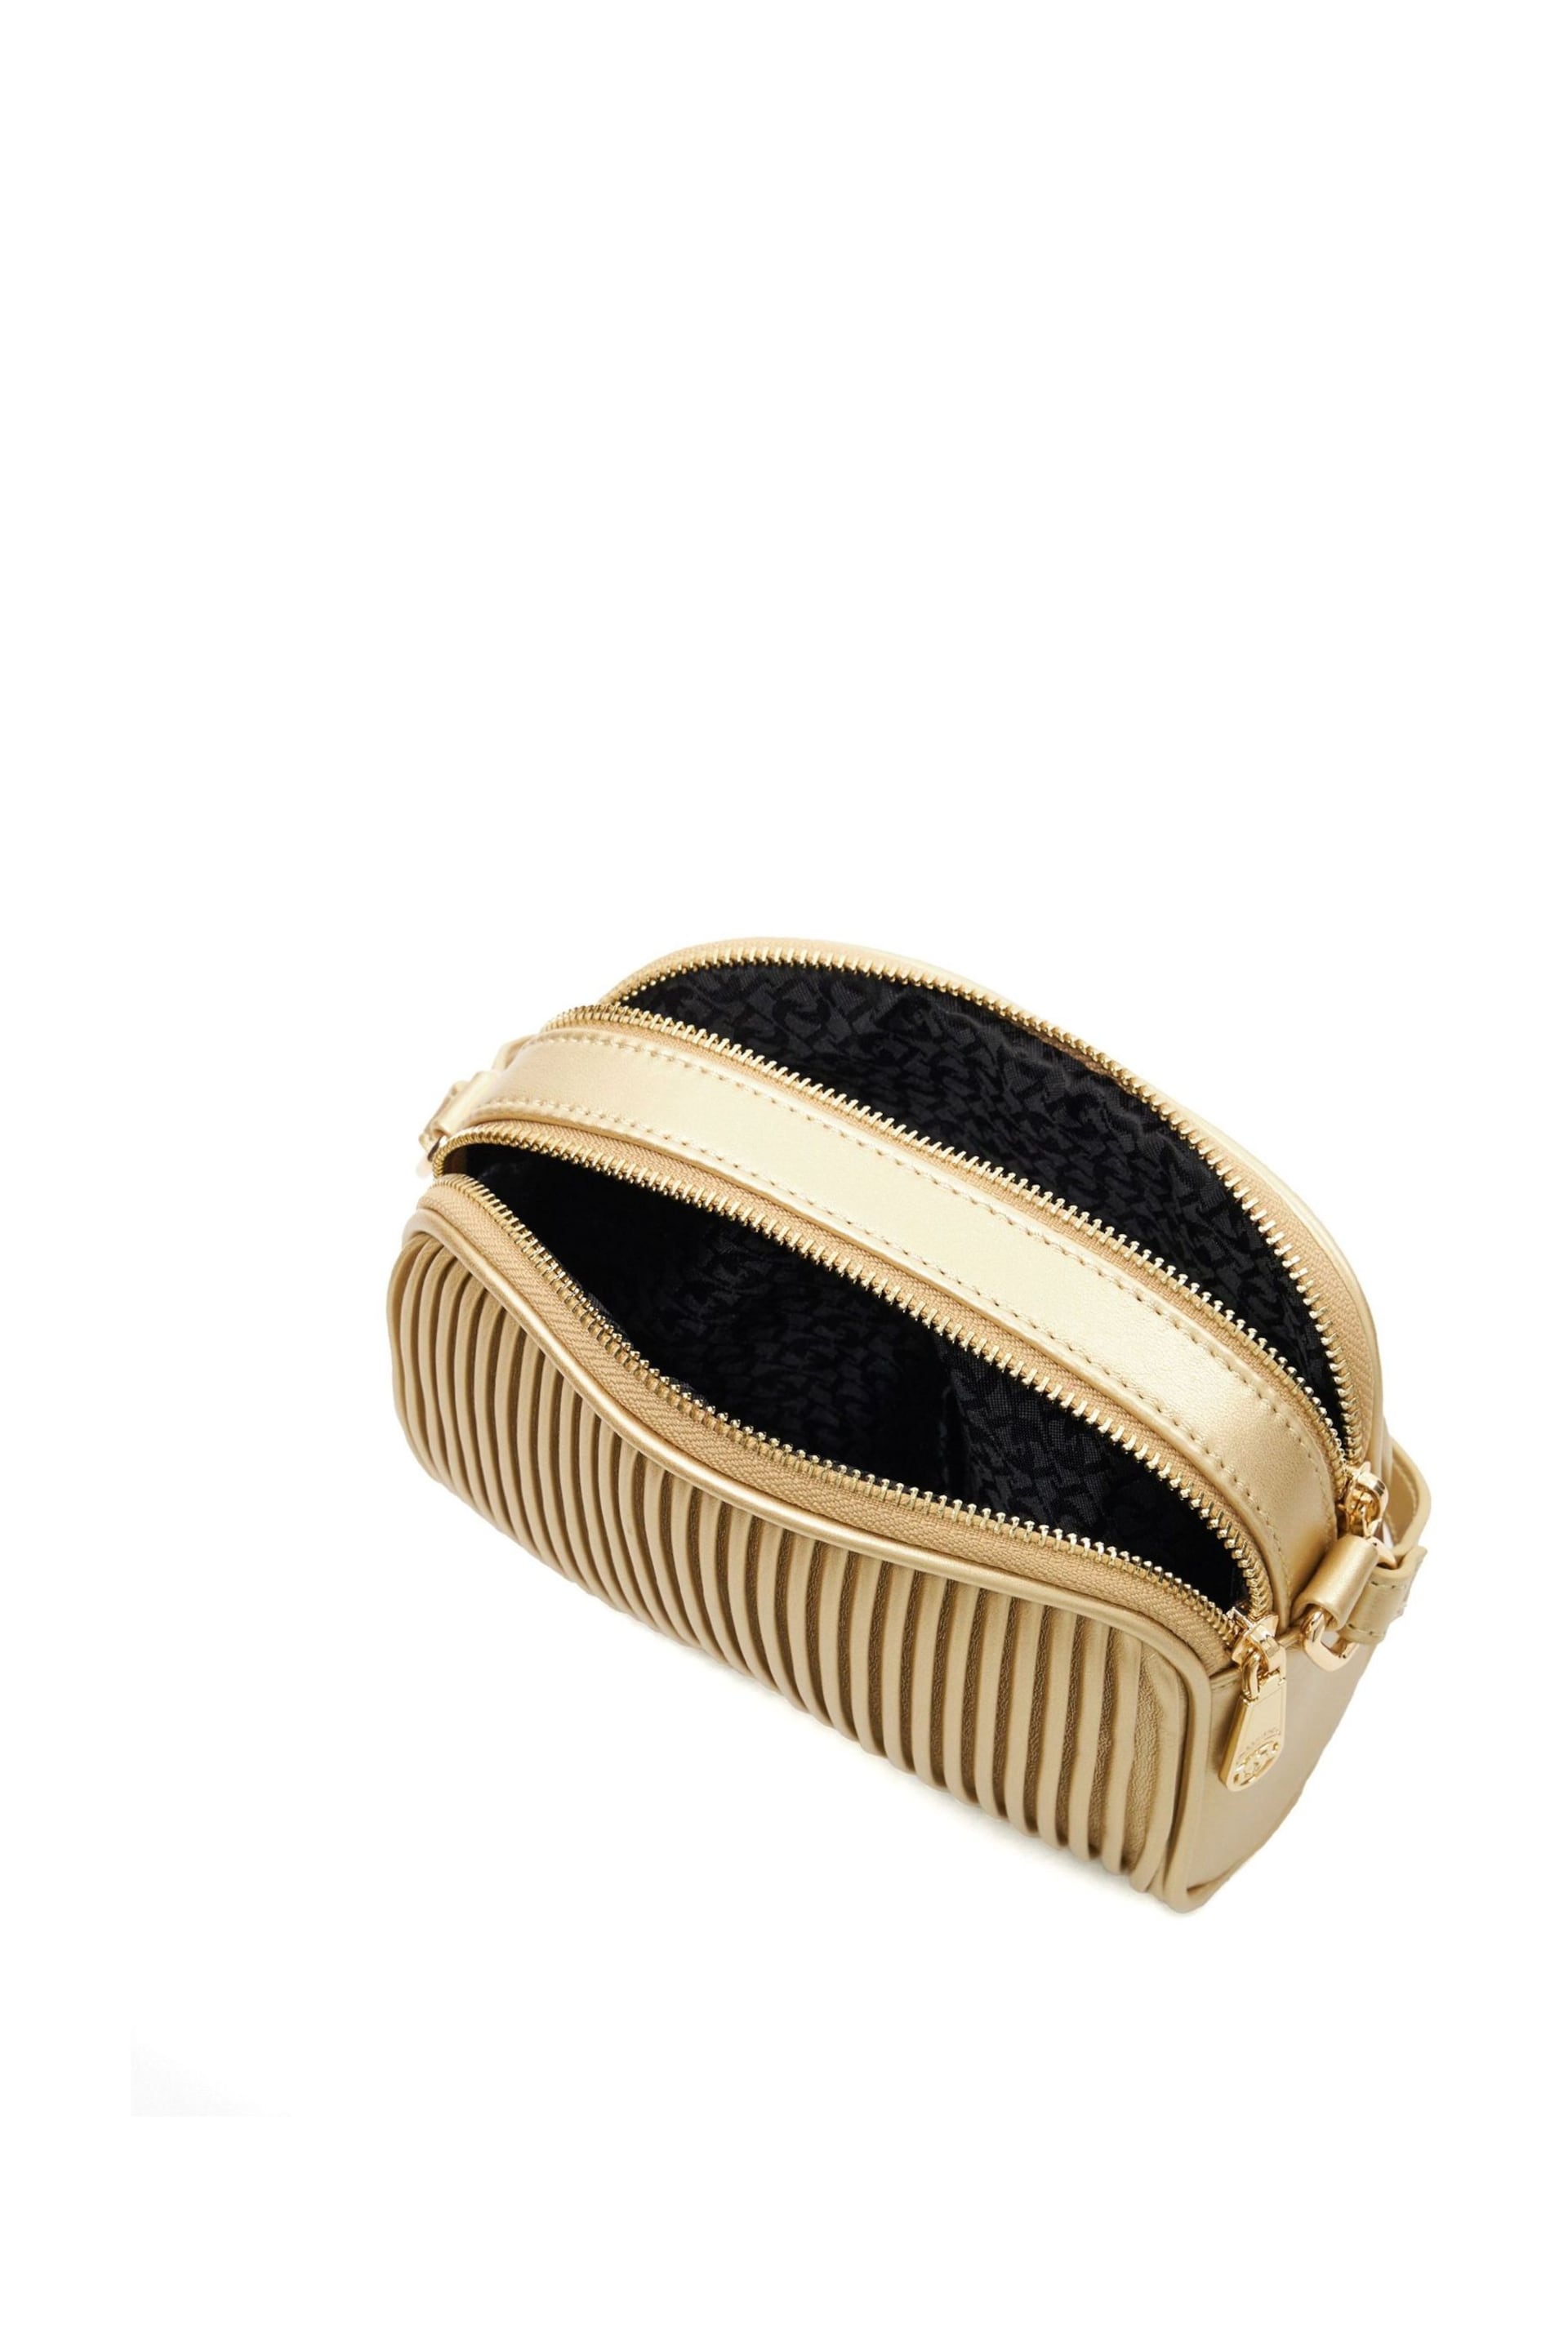 Dune London Gold Detail Pleat Cross-Body Mini Bag - Image 5 of 6